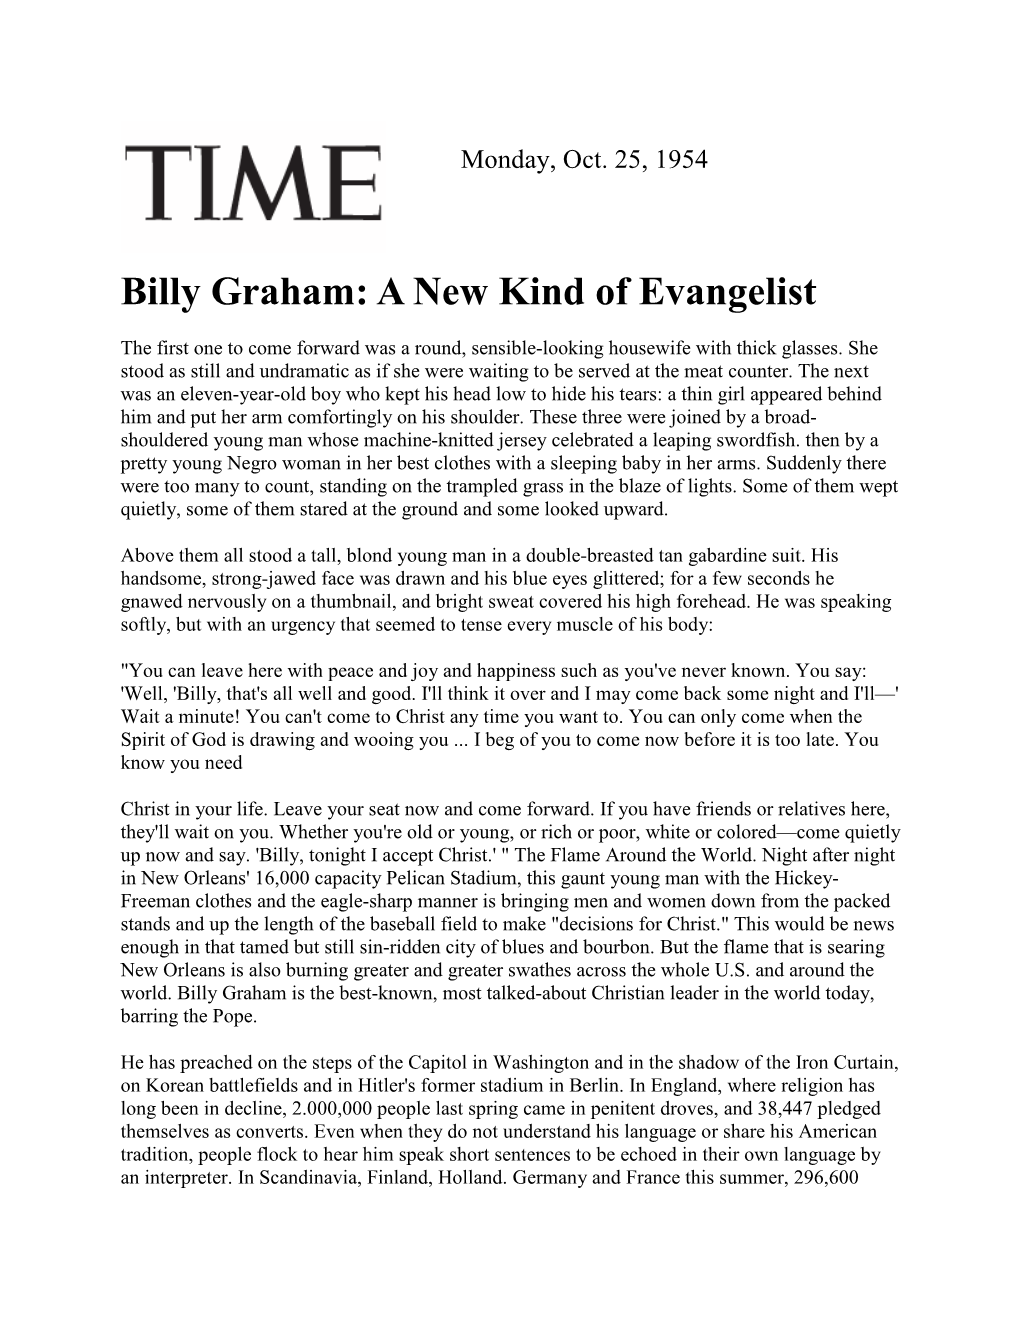 Billy Graham: a New Kind of Evangelist